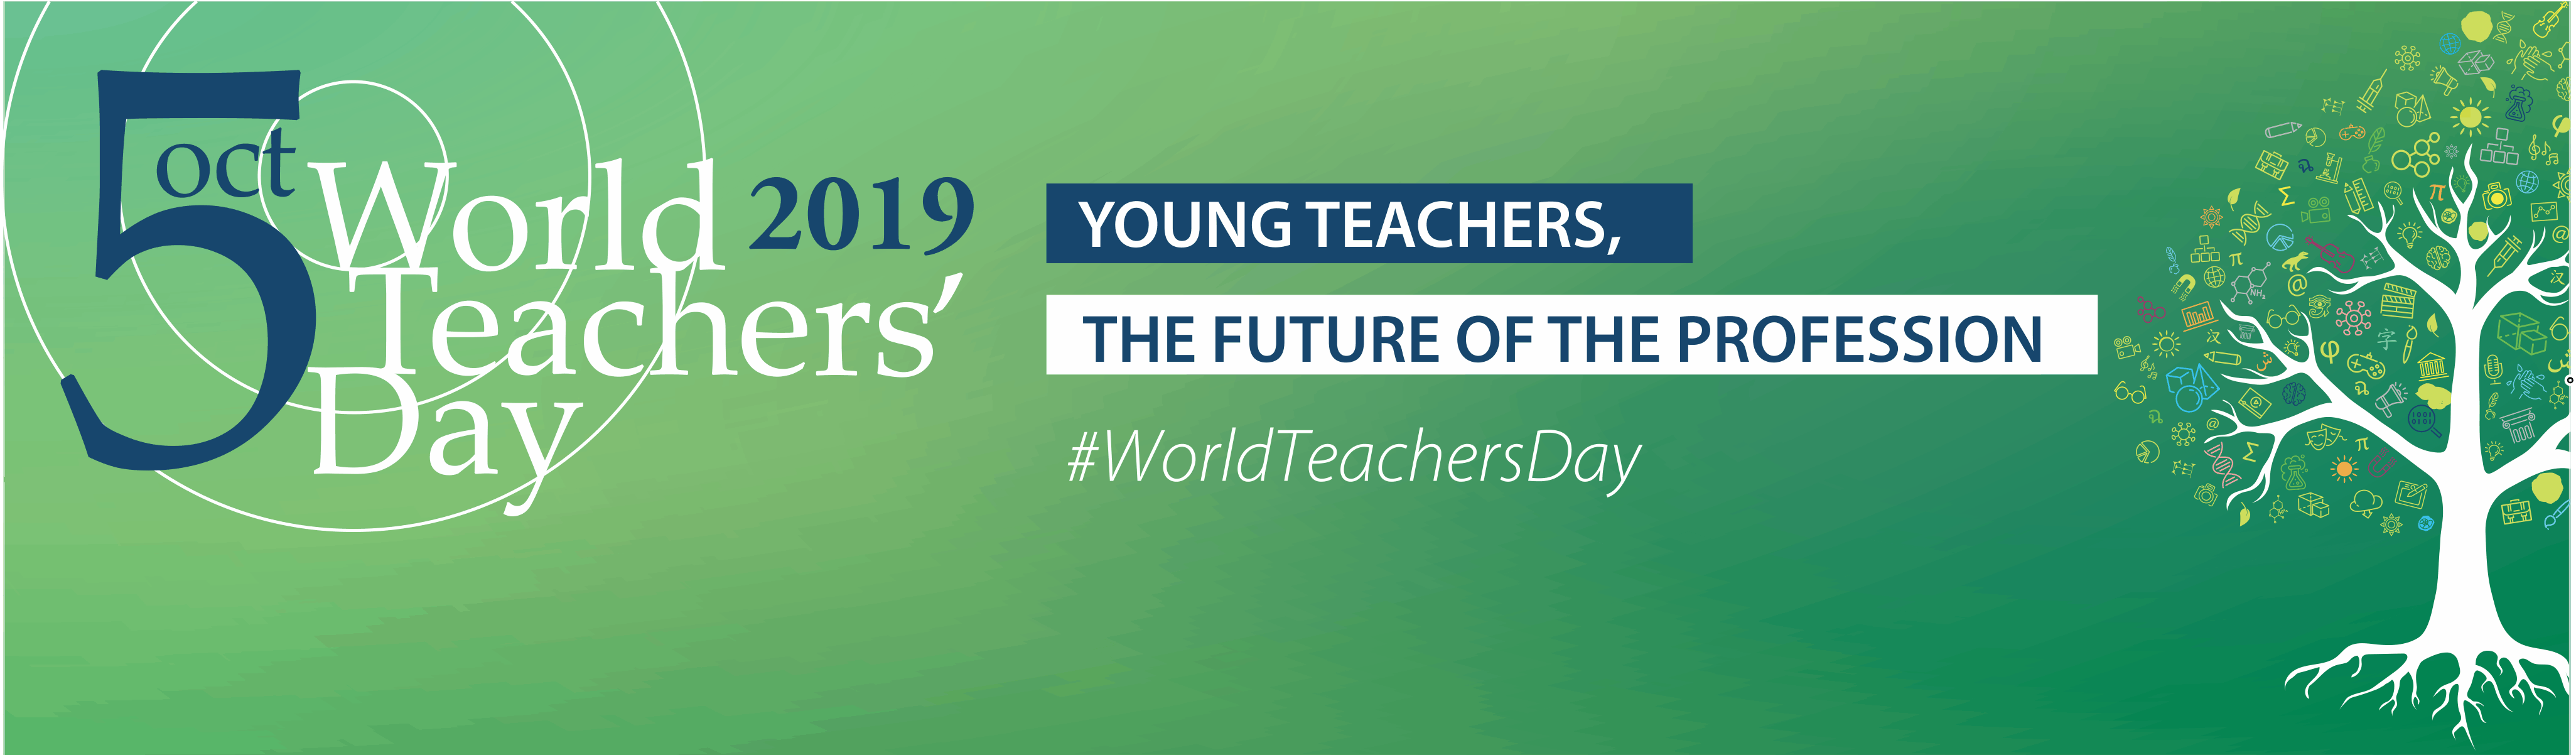 World Teacher's Day 2019